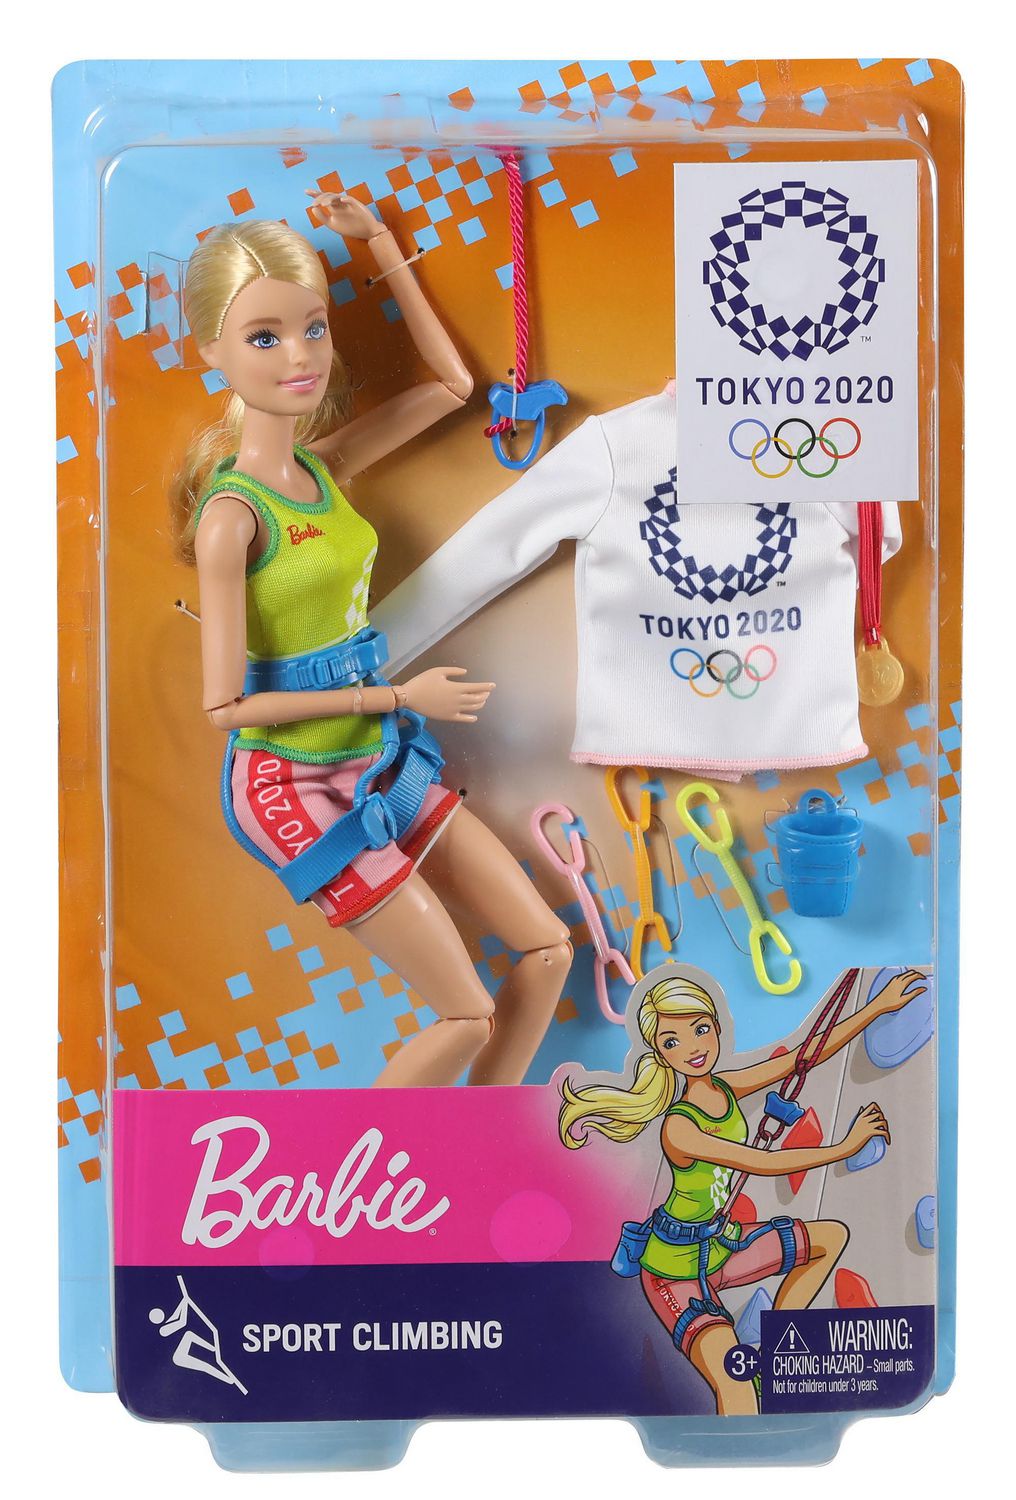 Barbie Careers Assortment Olympic Games Tokyo 2020 - Walmart.ca